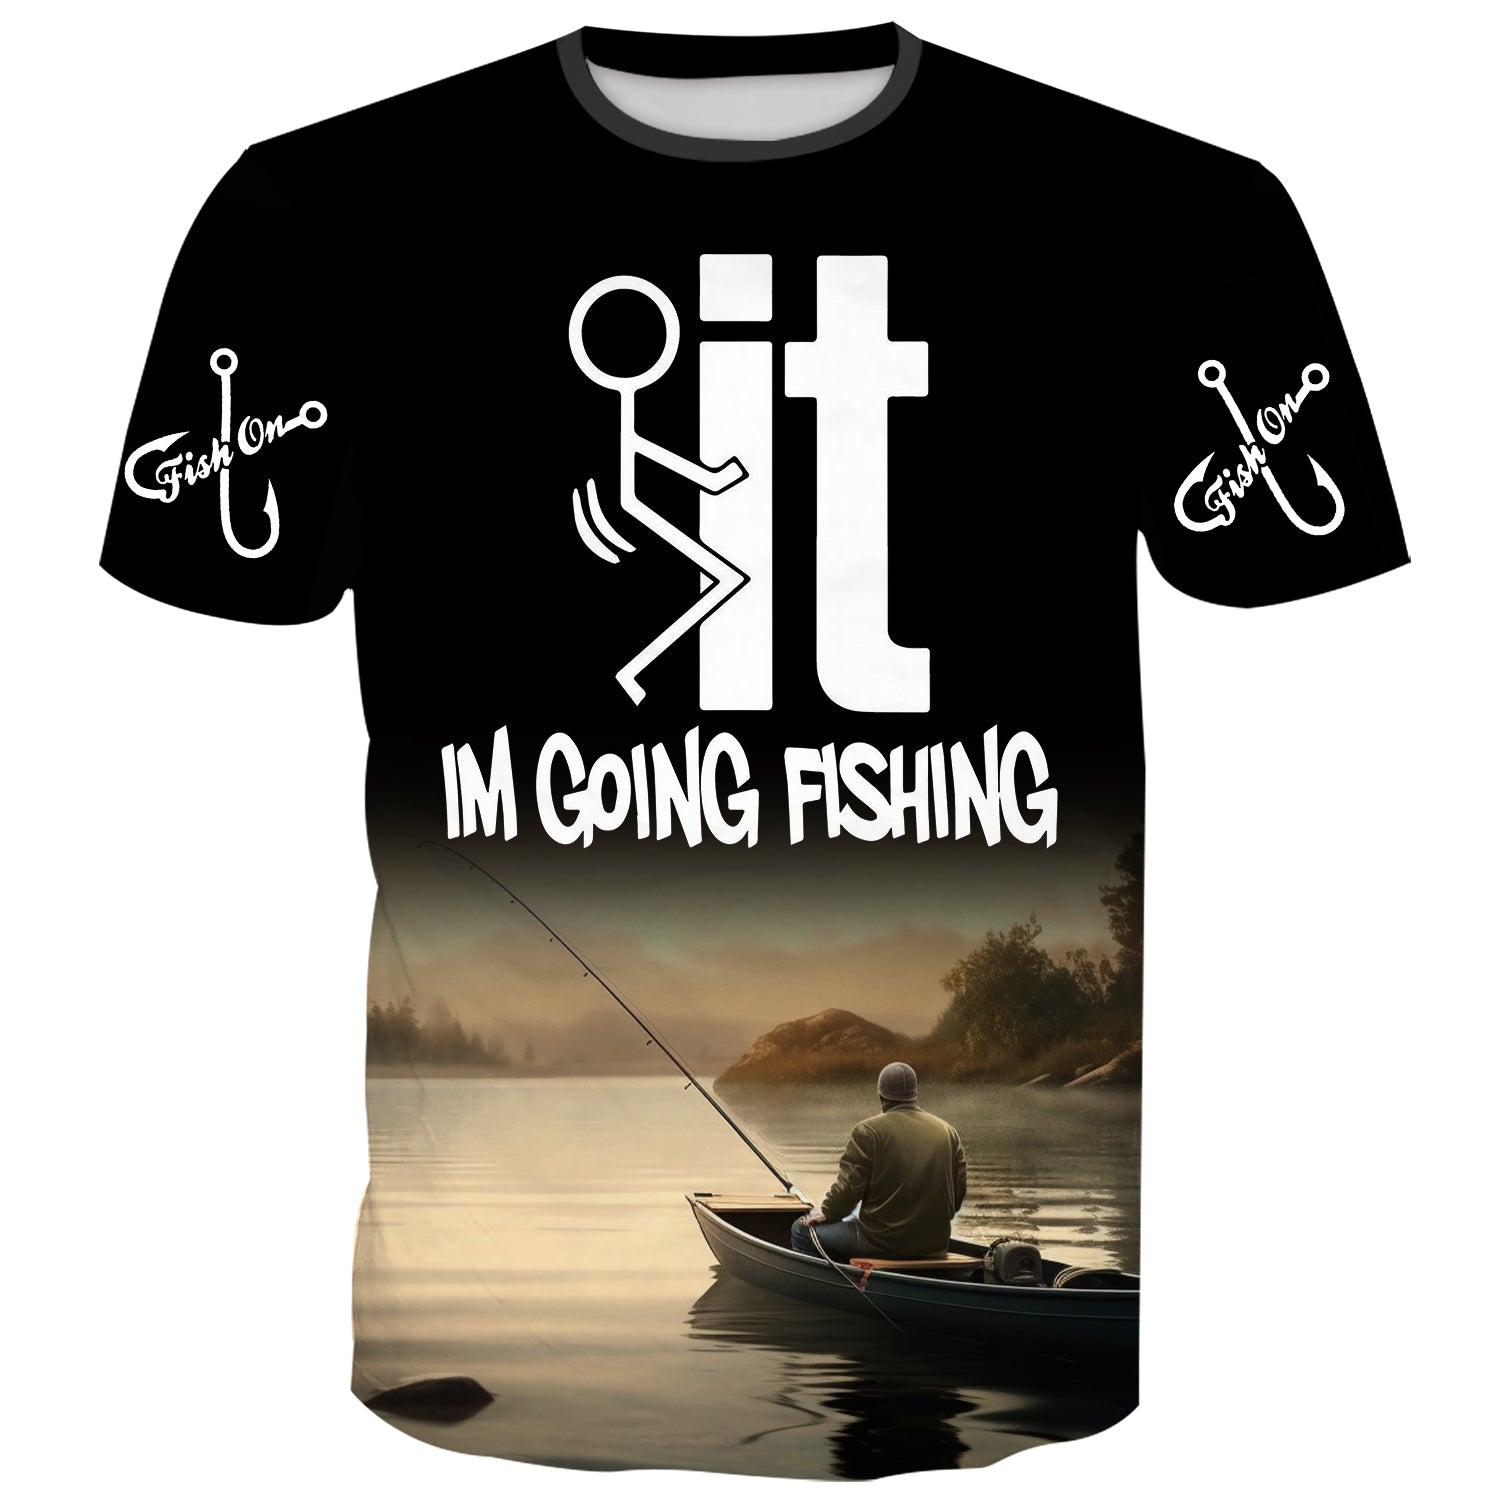 I Am Going Fishing T-Shirt for Men - Adventure-themed Tee, XL